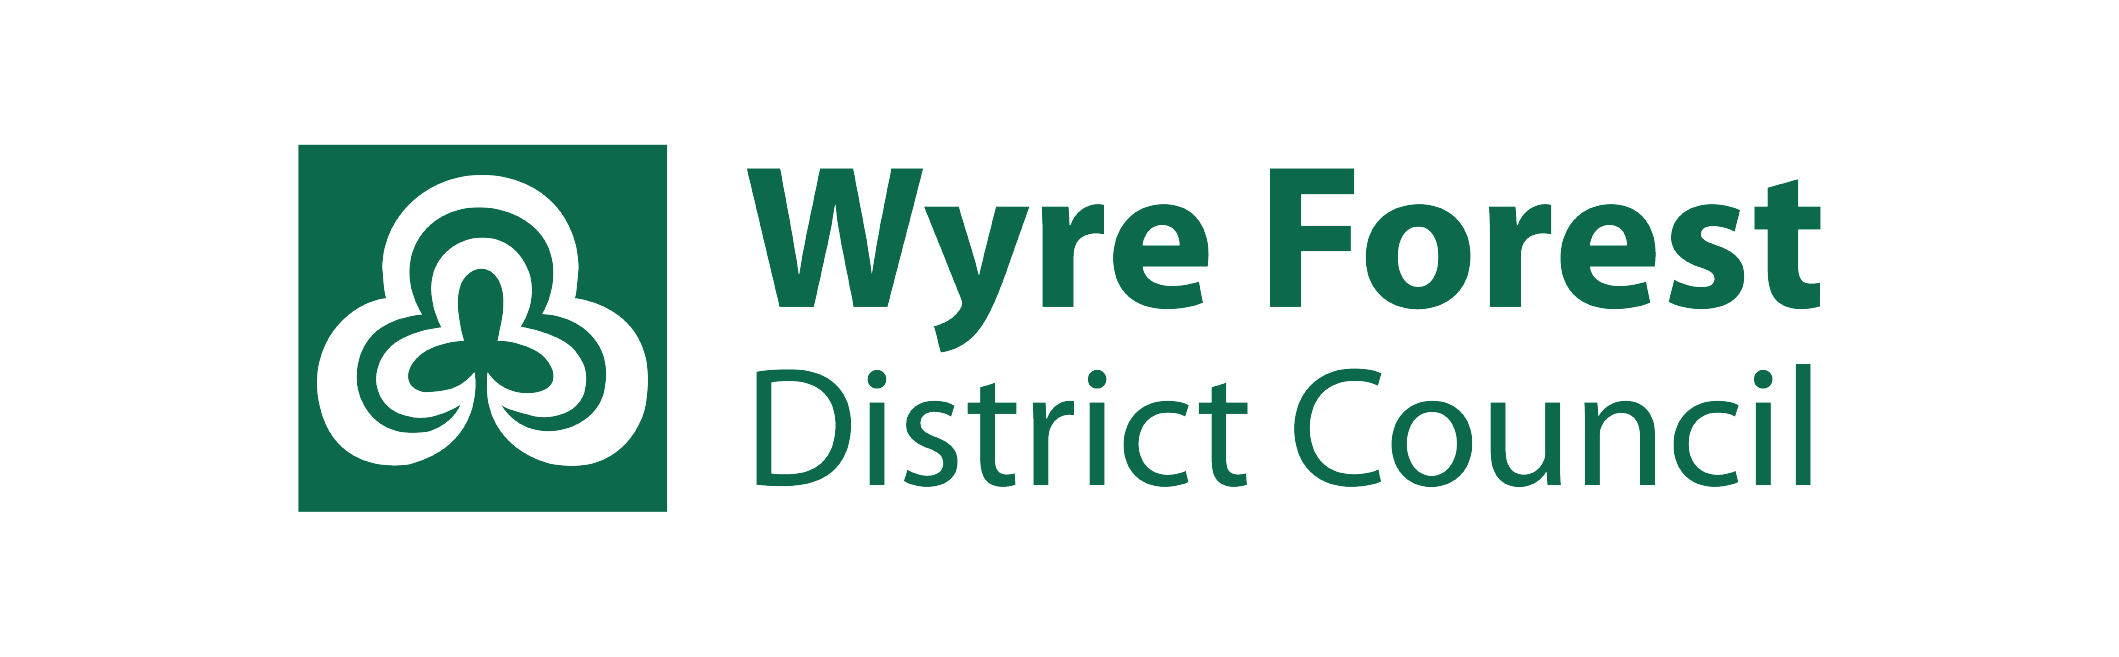 Wyre Forest District Council Logo